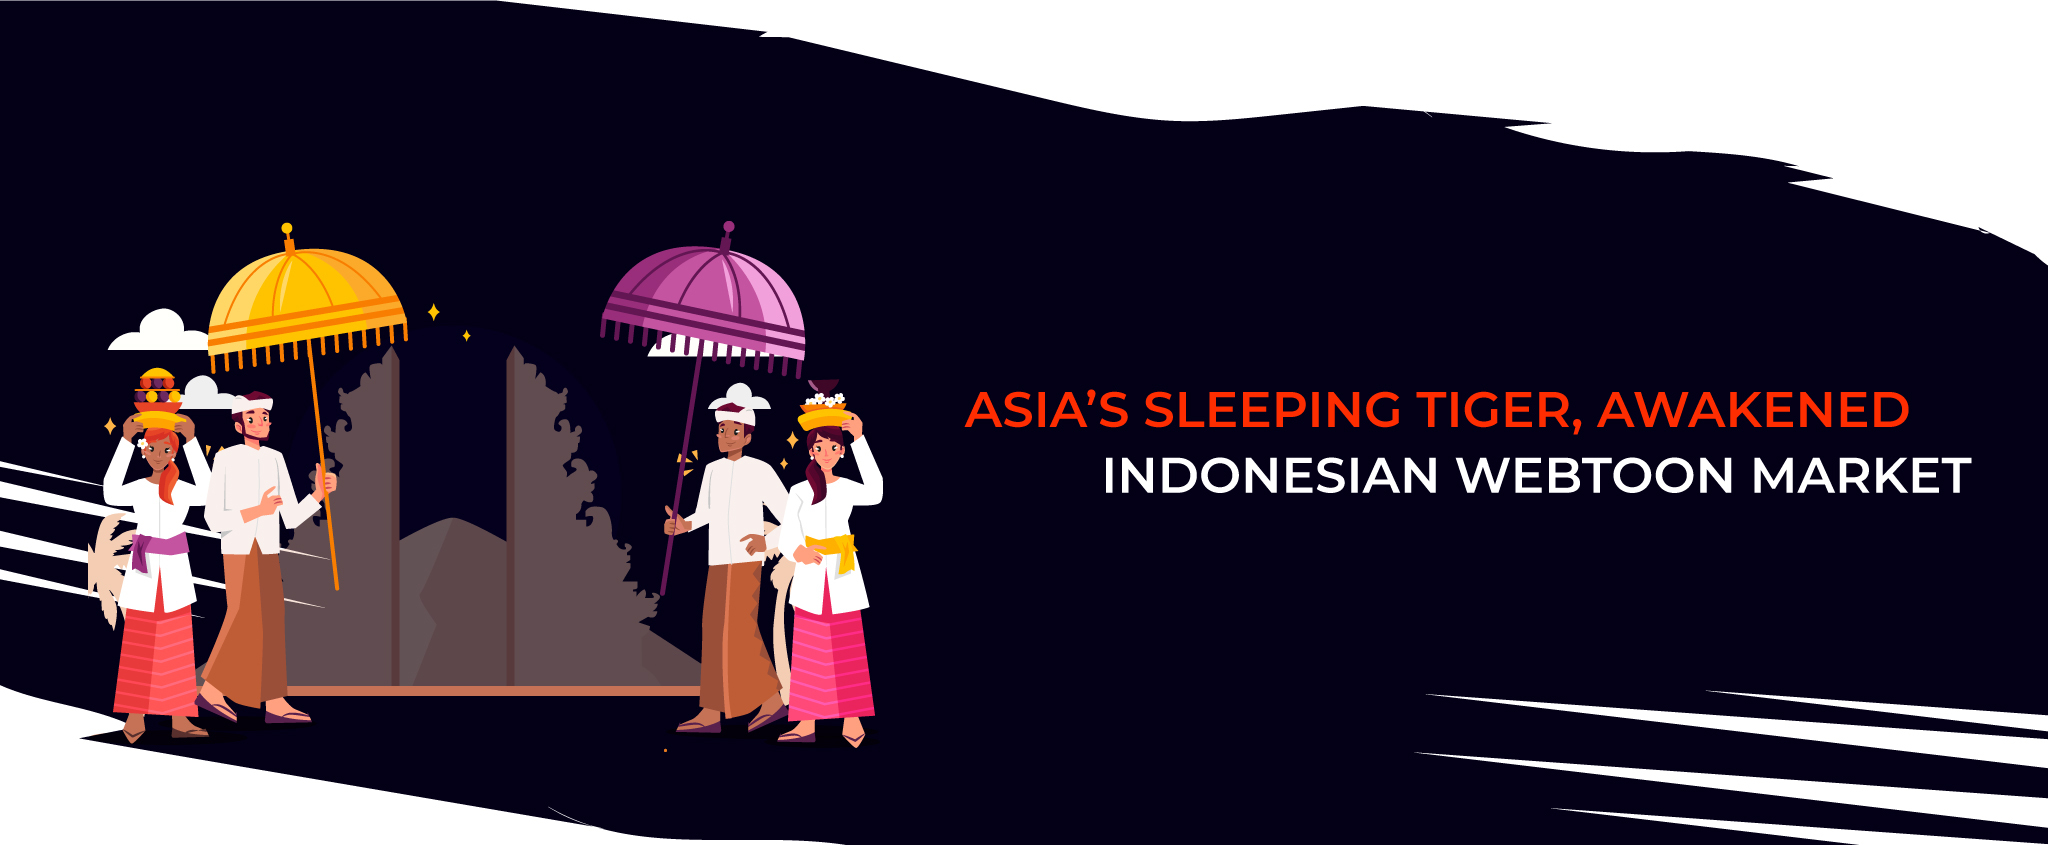 Asia’s Sleeping Tiger, Awakened - Indonesian Webtoon Market